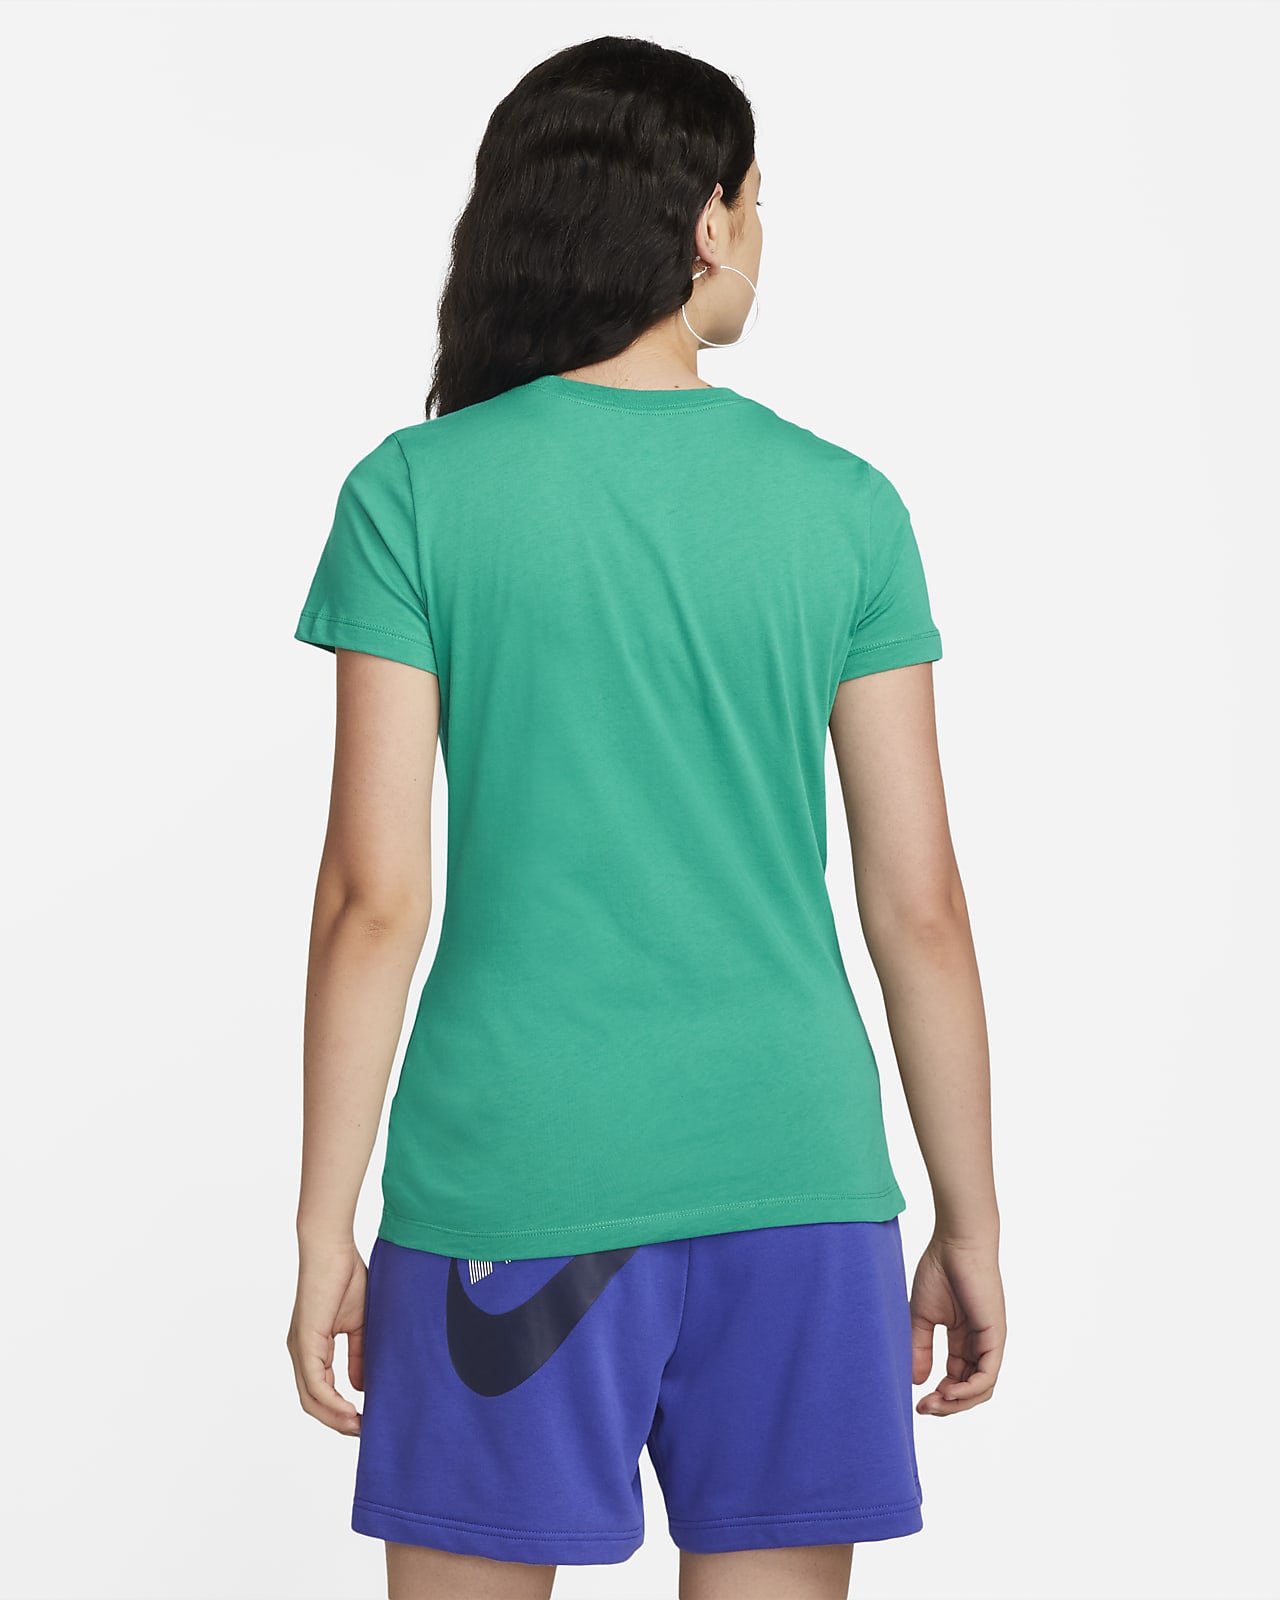 Combinaison Nike Sportswear Icon Clash Pour Femme - Noir from Nike